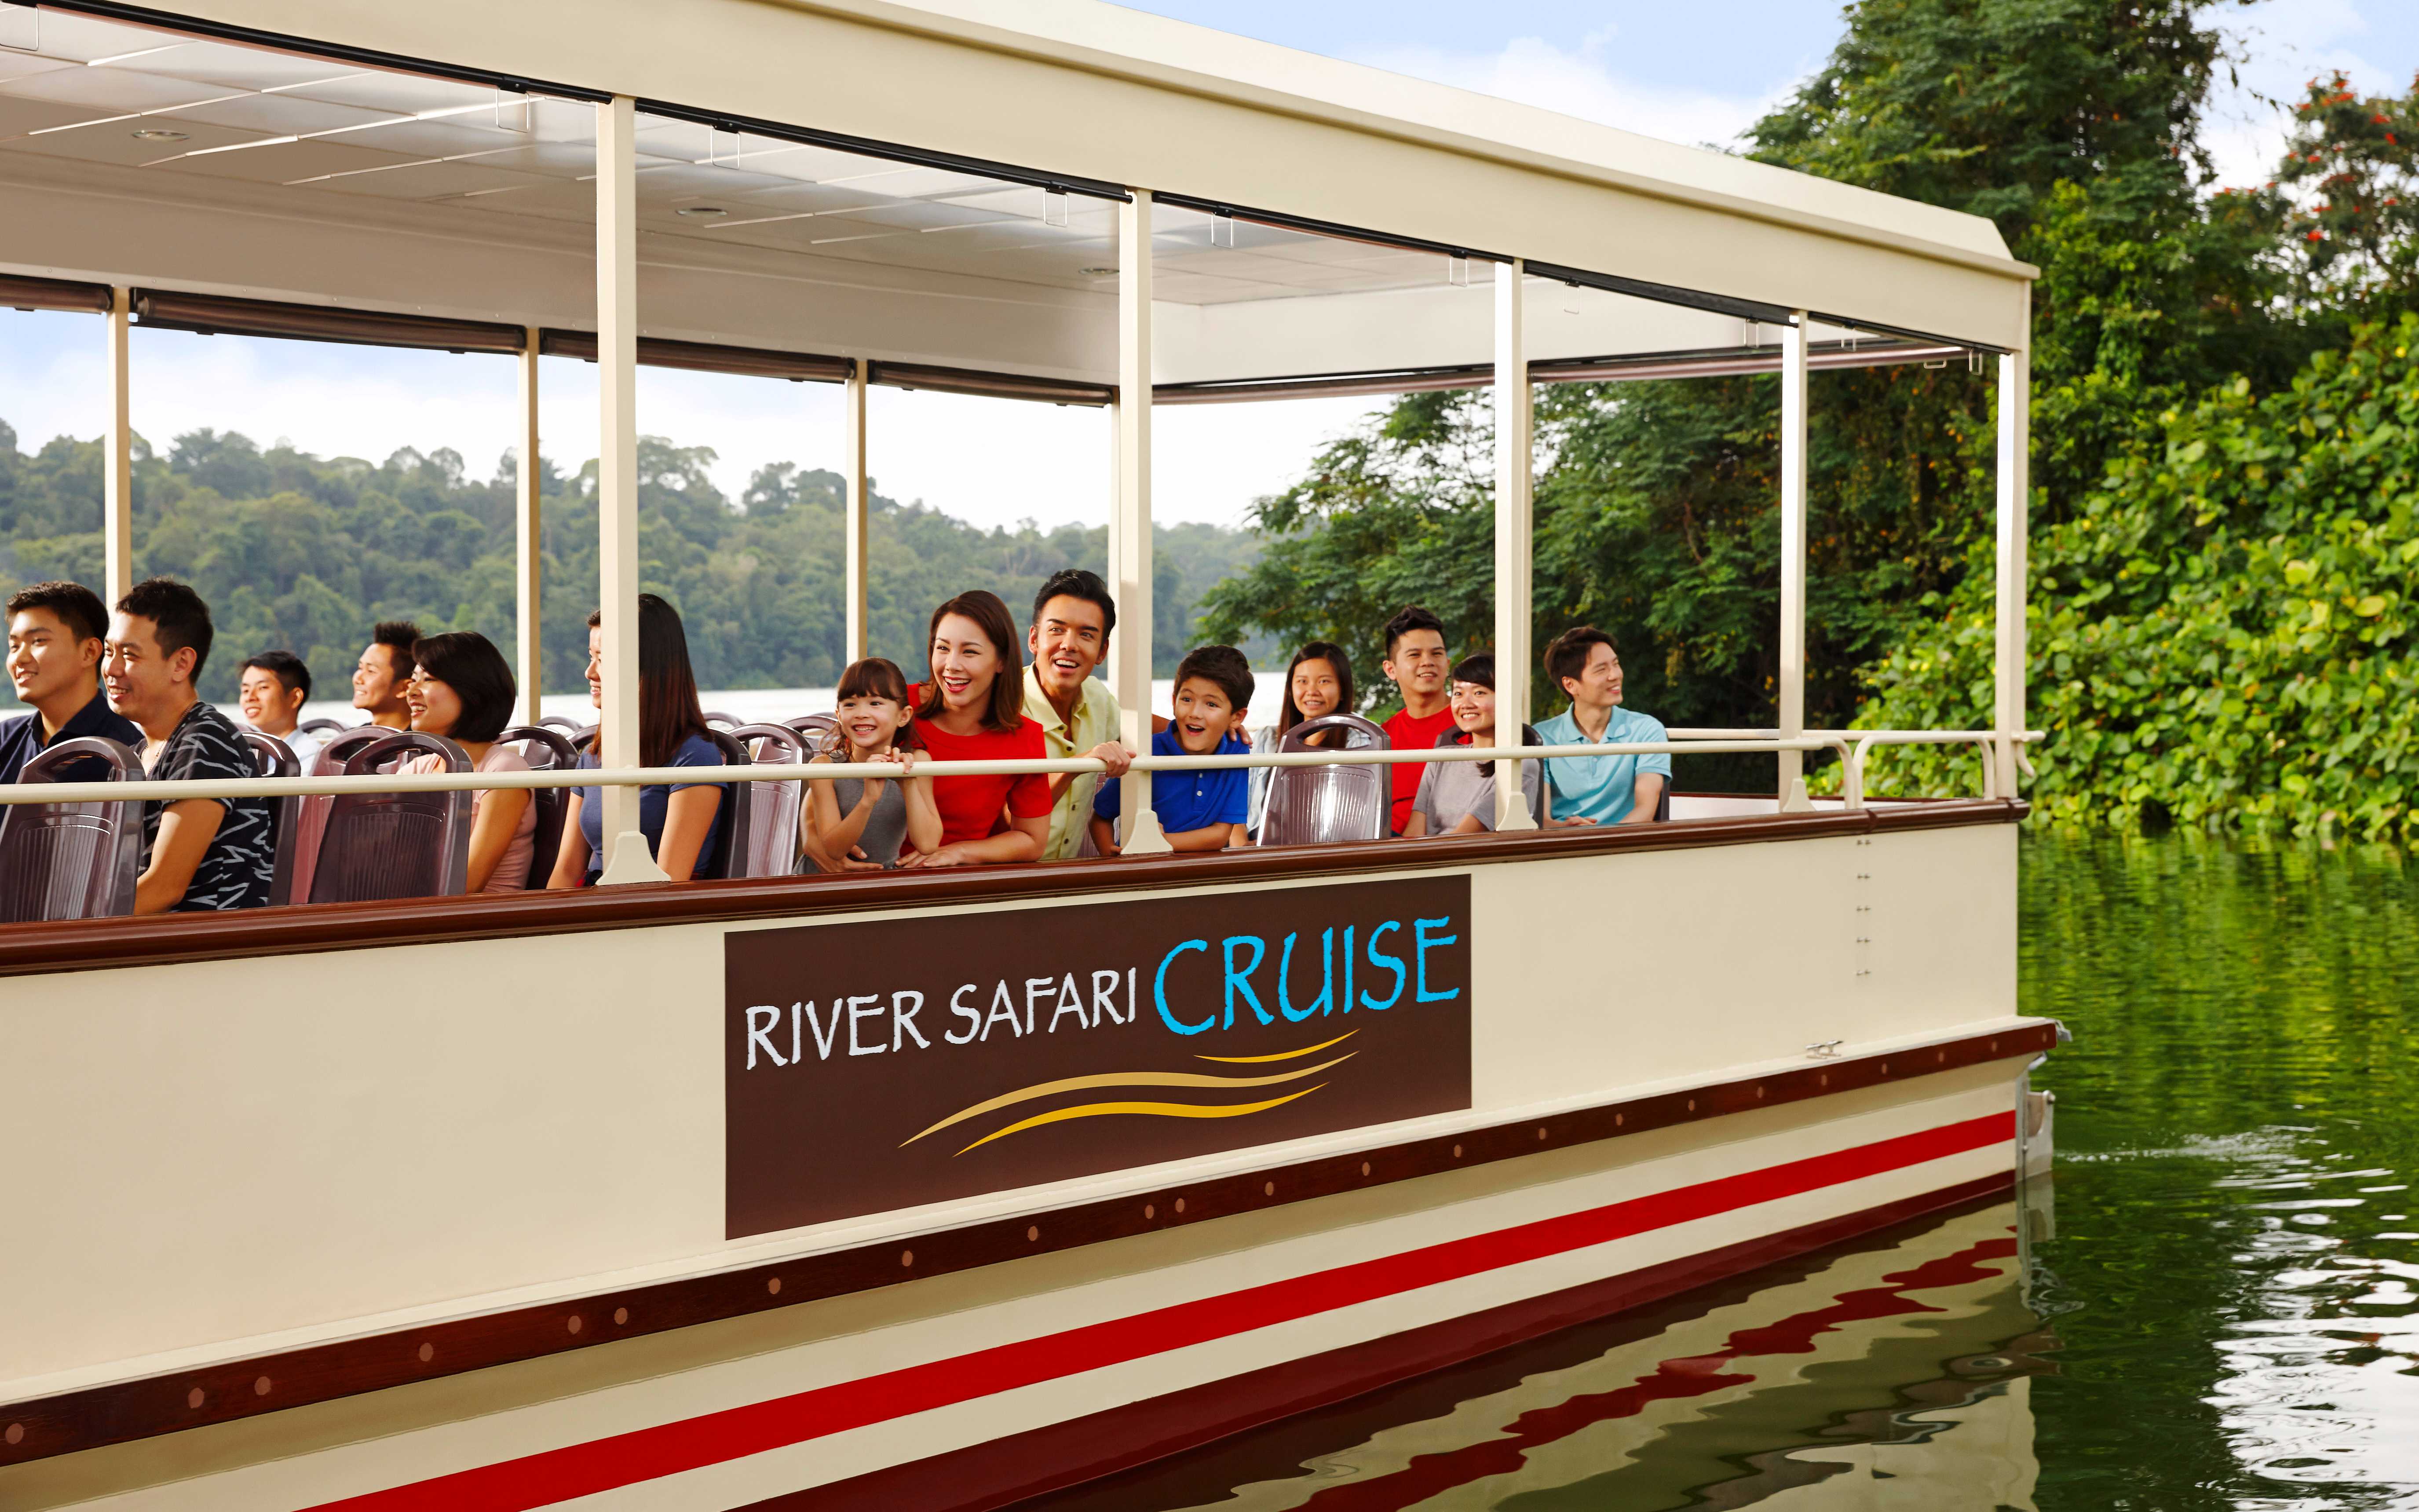 River Safari: Skip the Line Tickets with 2 Boat Rides